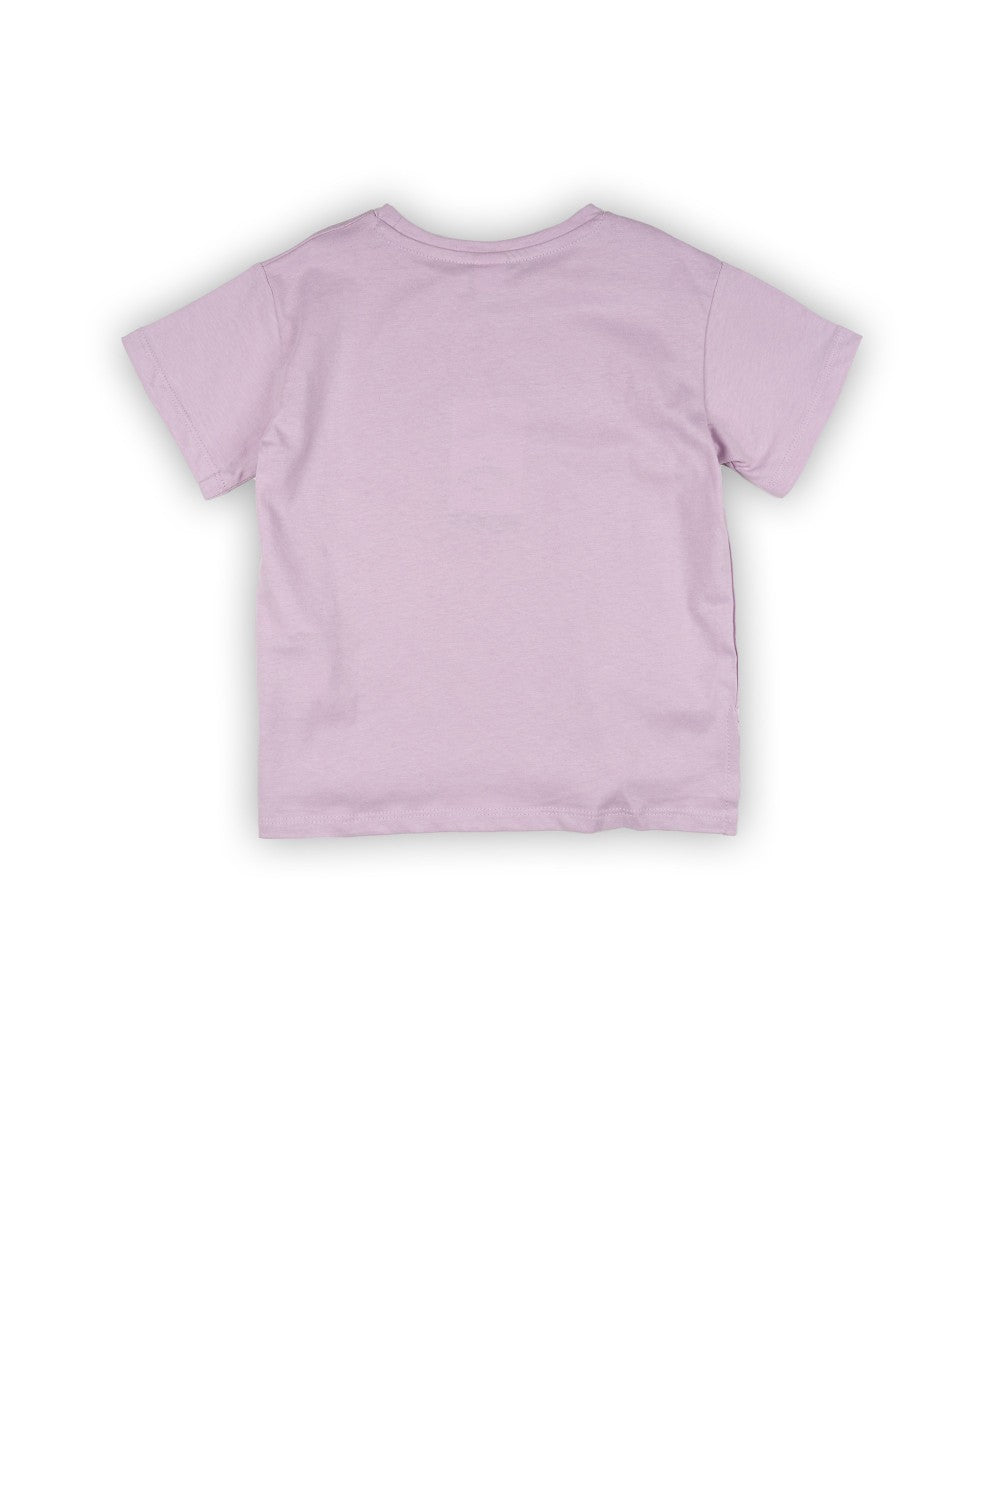 Camiseta de niña morado VERANO/Charanga